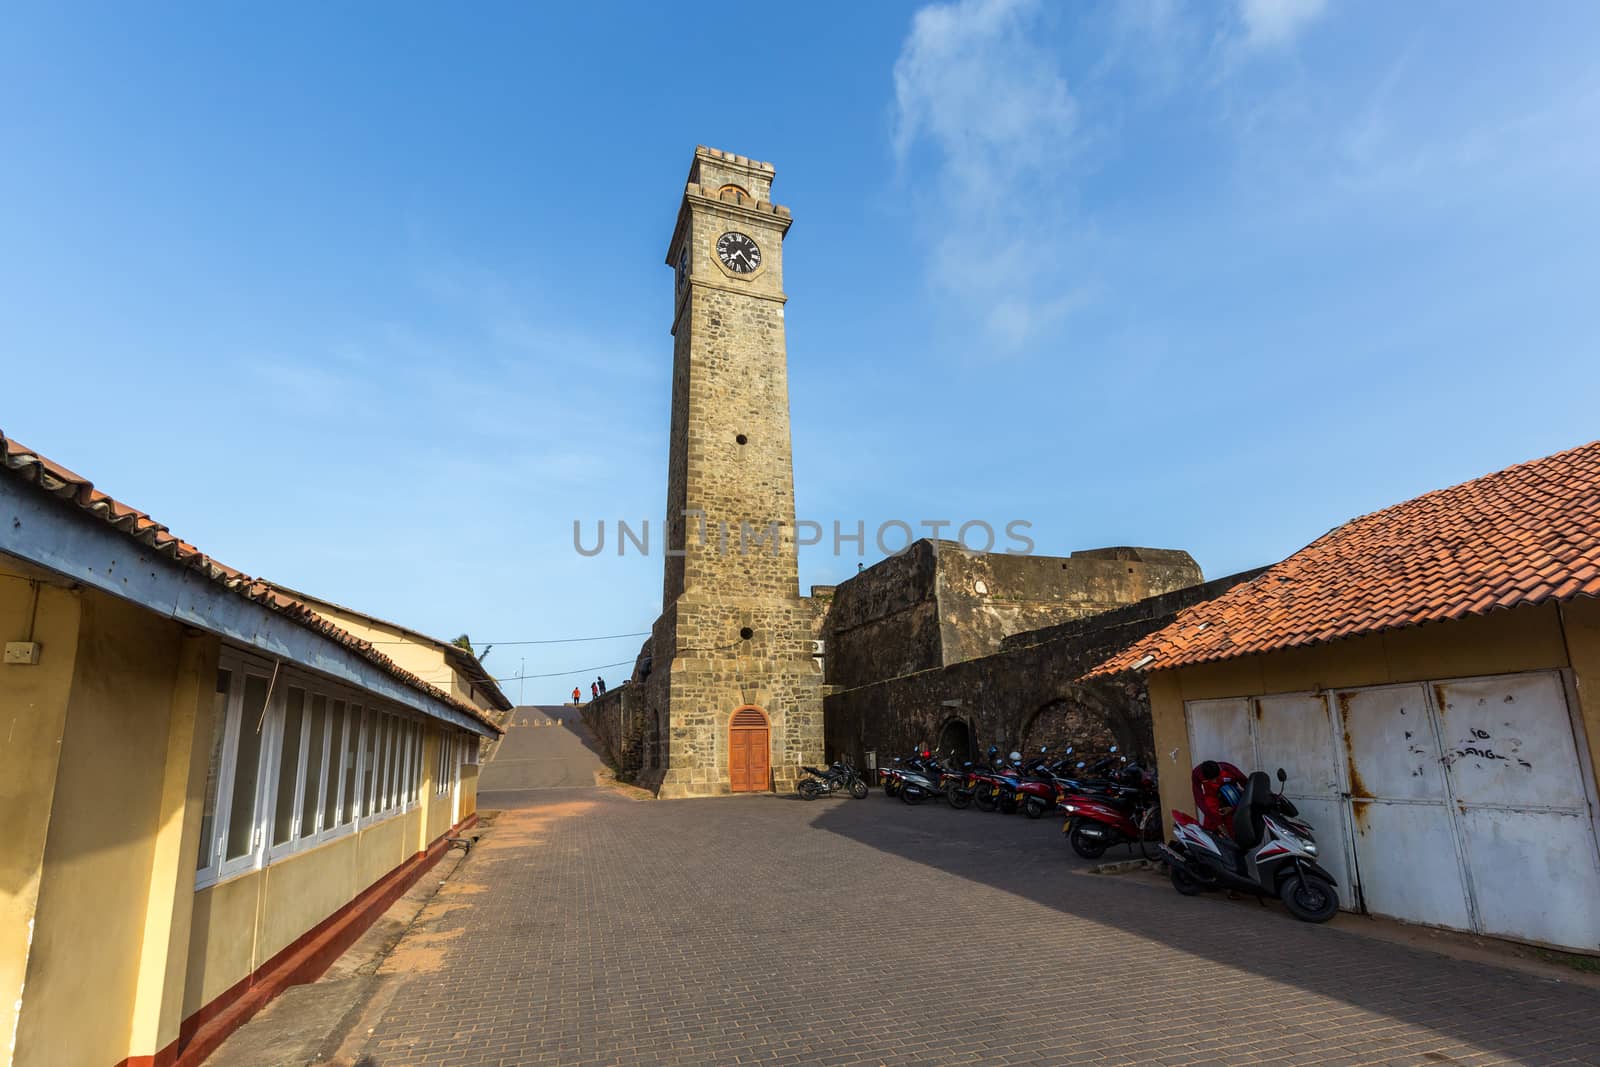 Clock Tower in Galle Fort, Sri Lanka by oliverfoerstner